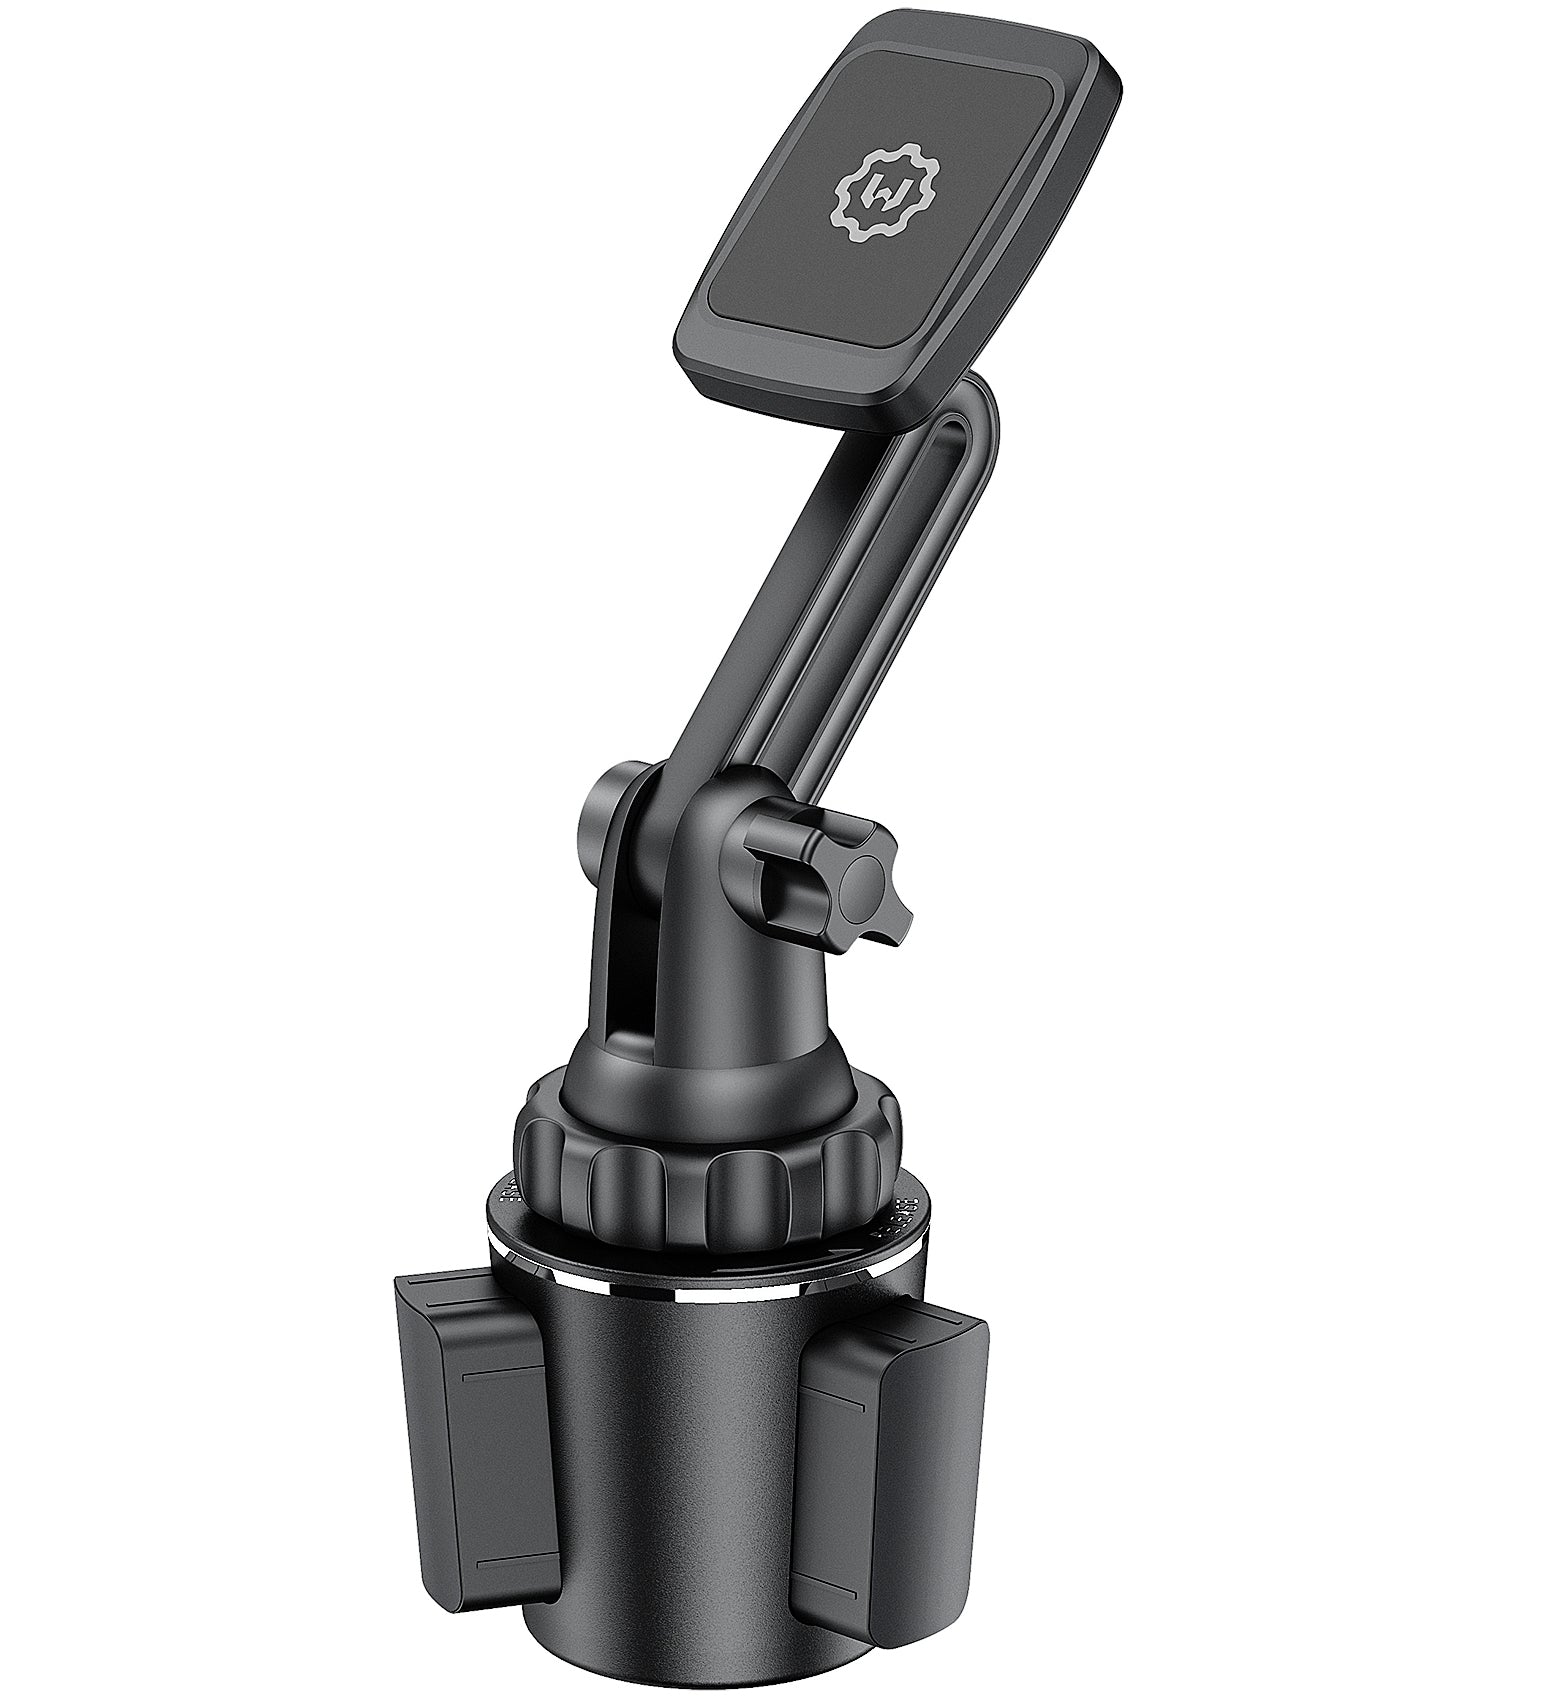 Wixgear Magnetic Cup Holder Phone Mount, Extendable Arm Universal Car Cup Holder Adjustable Base Automobile Cup Holder Smart Phone Cradle Car Mount